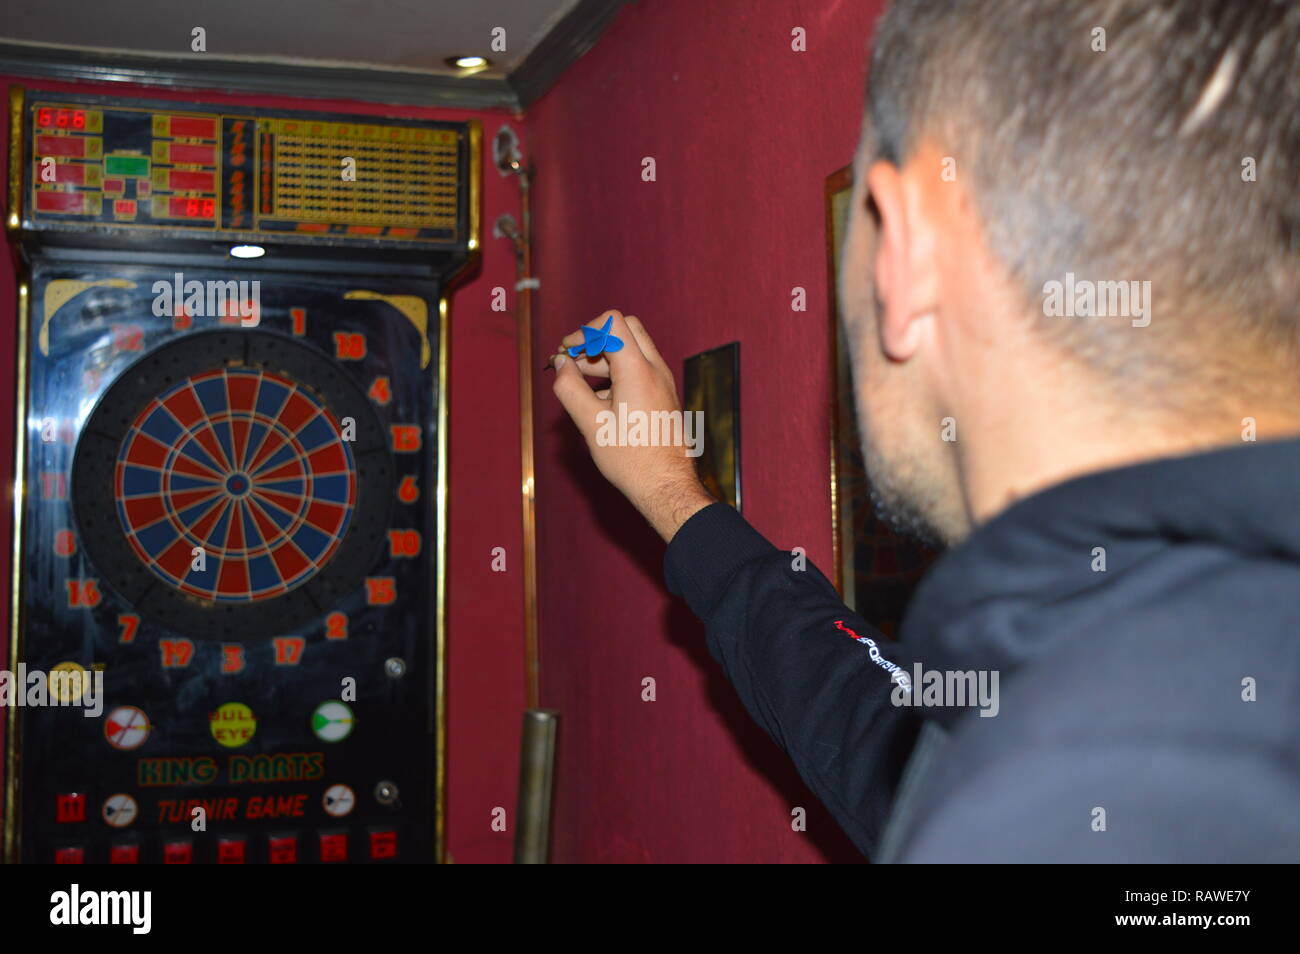 Game of darts, person playing darts hitting bulls eye Stock Photo